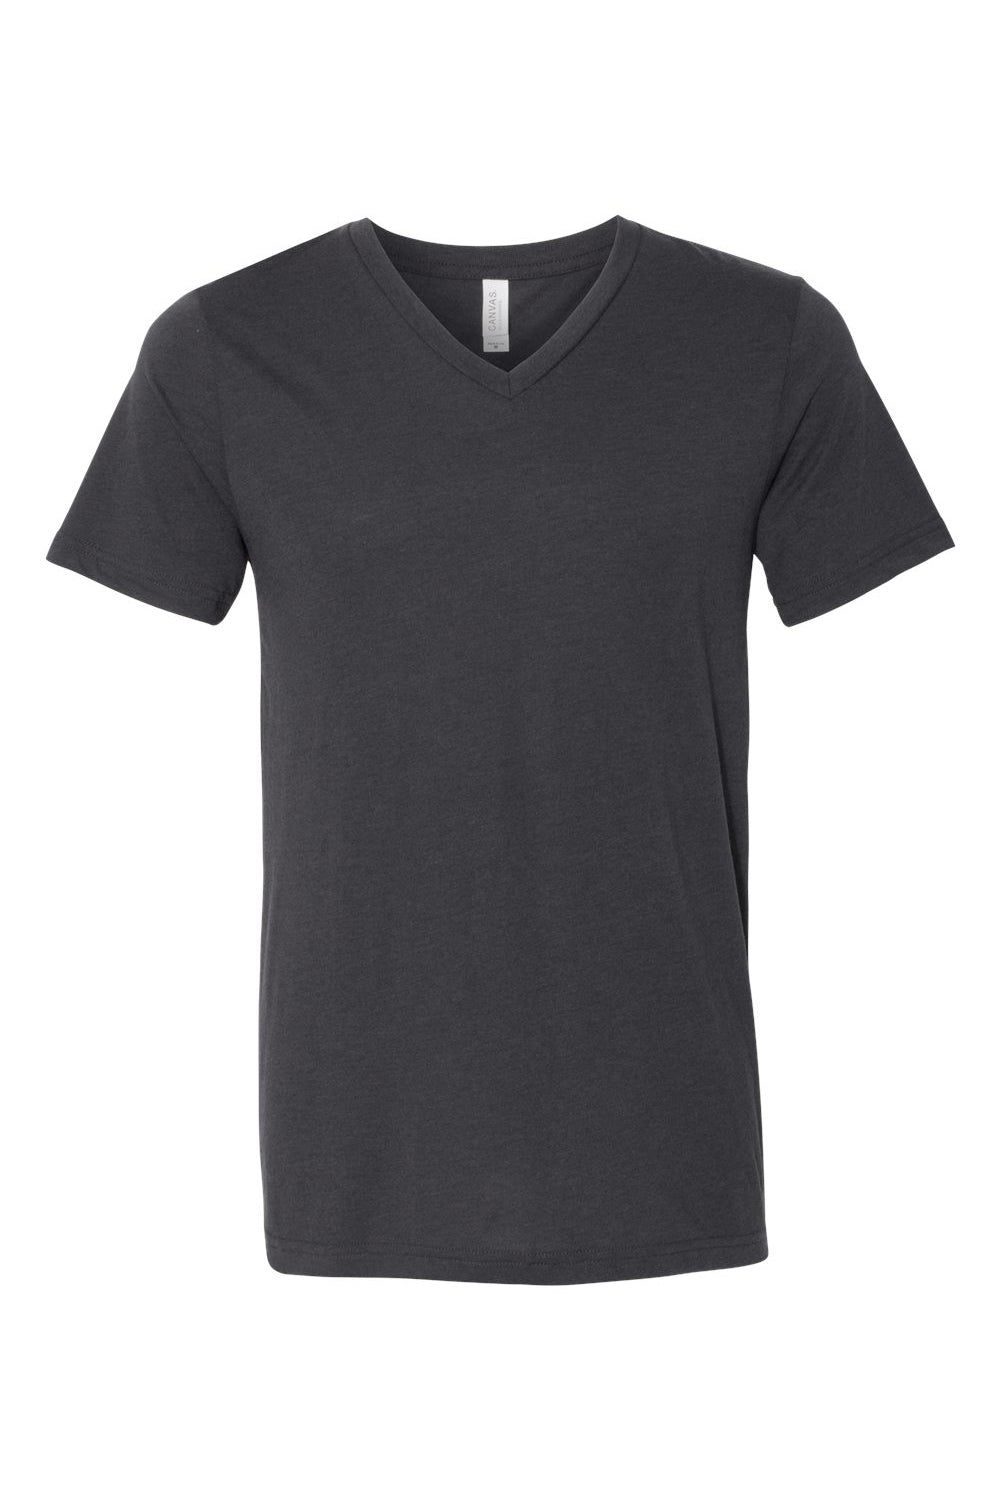 Bella + Canvas BC3415/3415C/3415 Mens Short Sleeve V-Neck T-Shirt Solid Dark Grey Flat Front